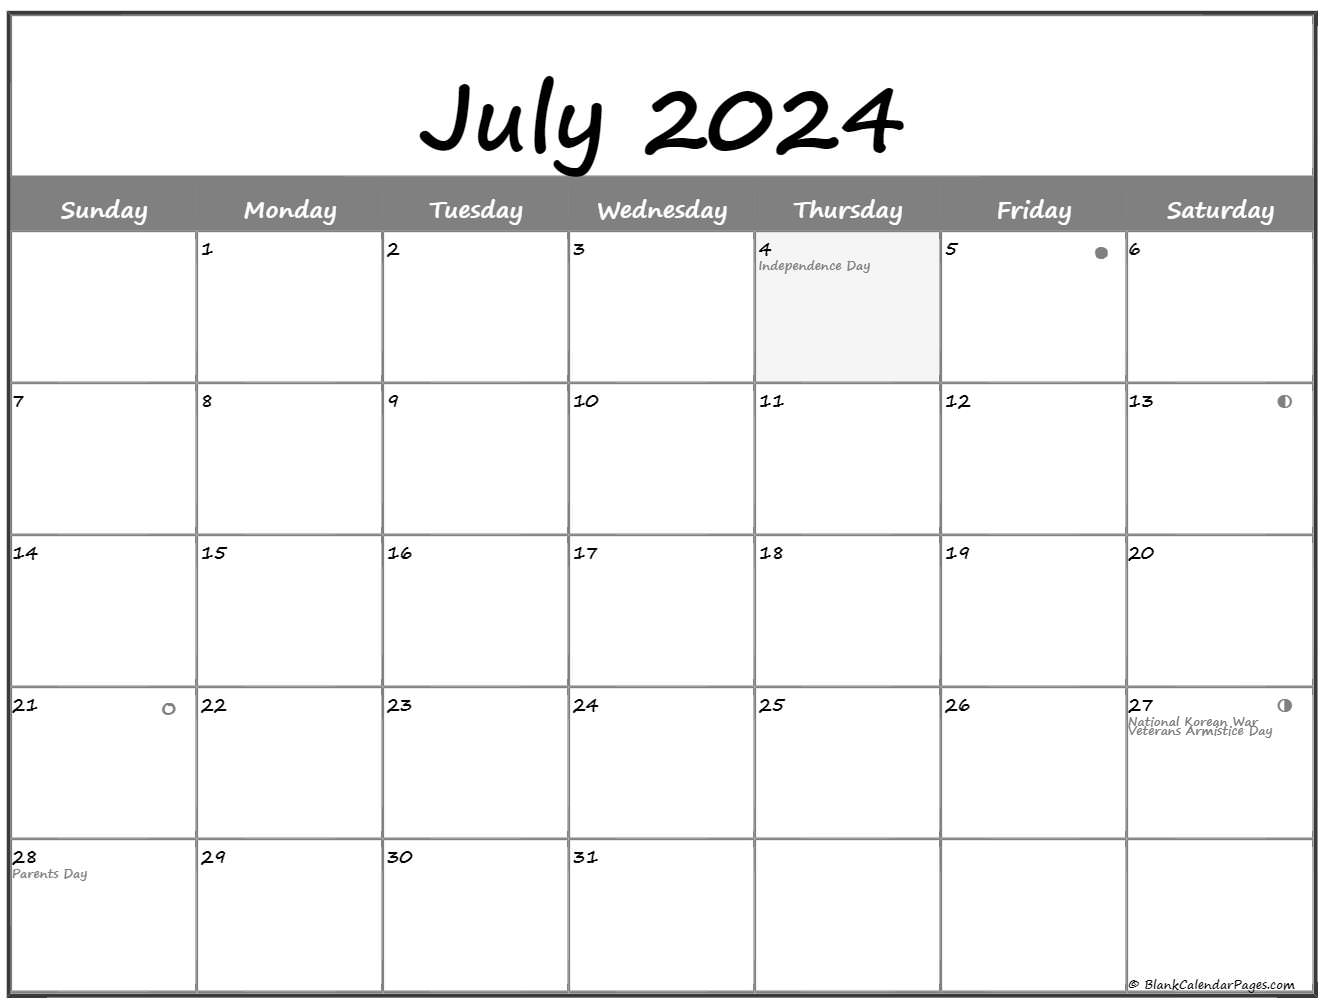 Moon Phase Calendar April 2022 July 2022 Lunar Calendar | Moon Phase Calendar